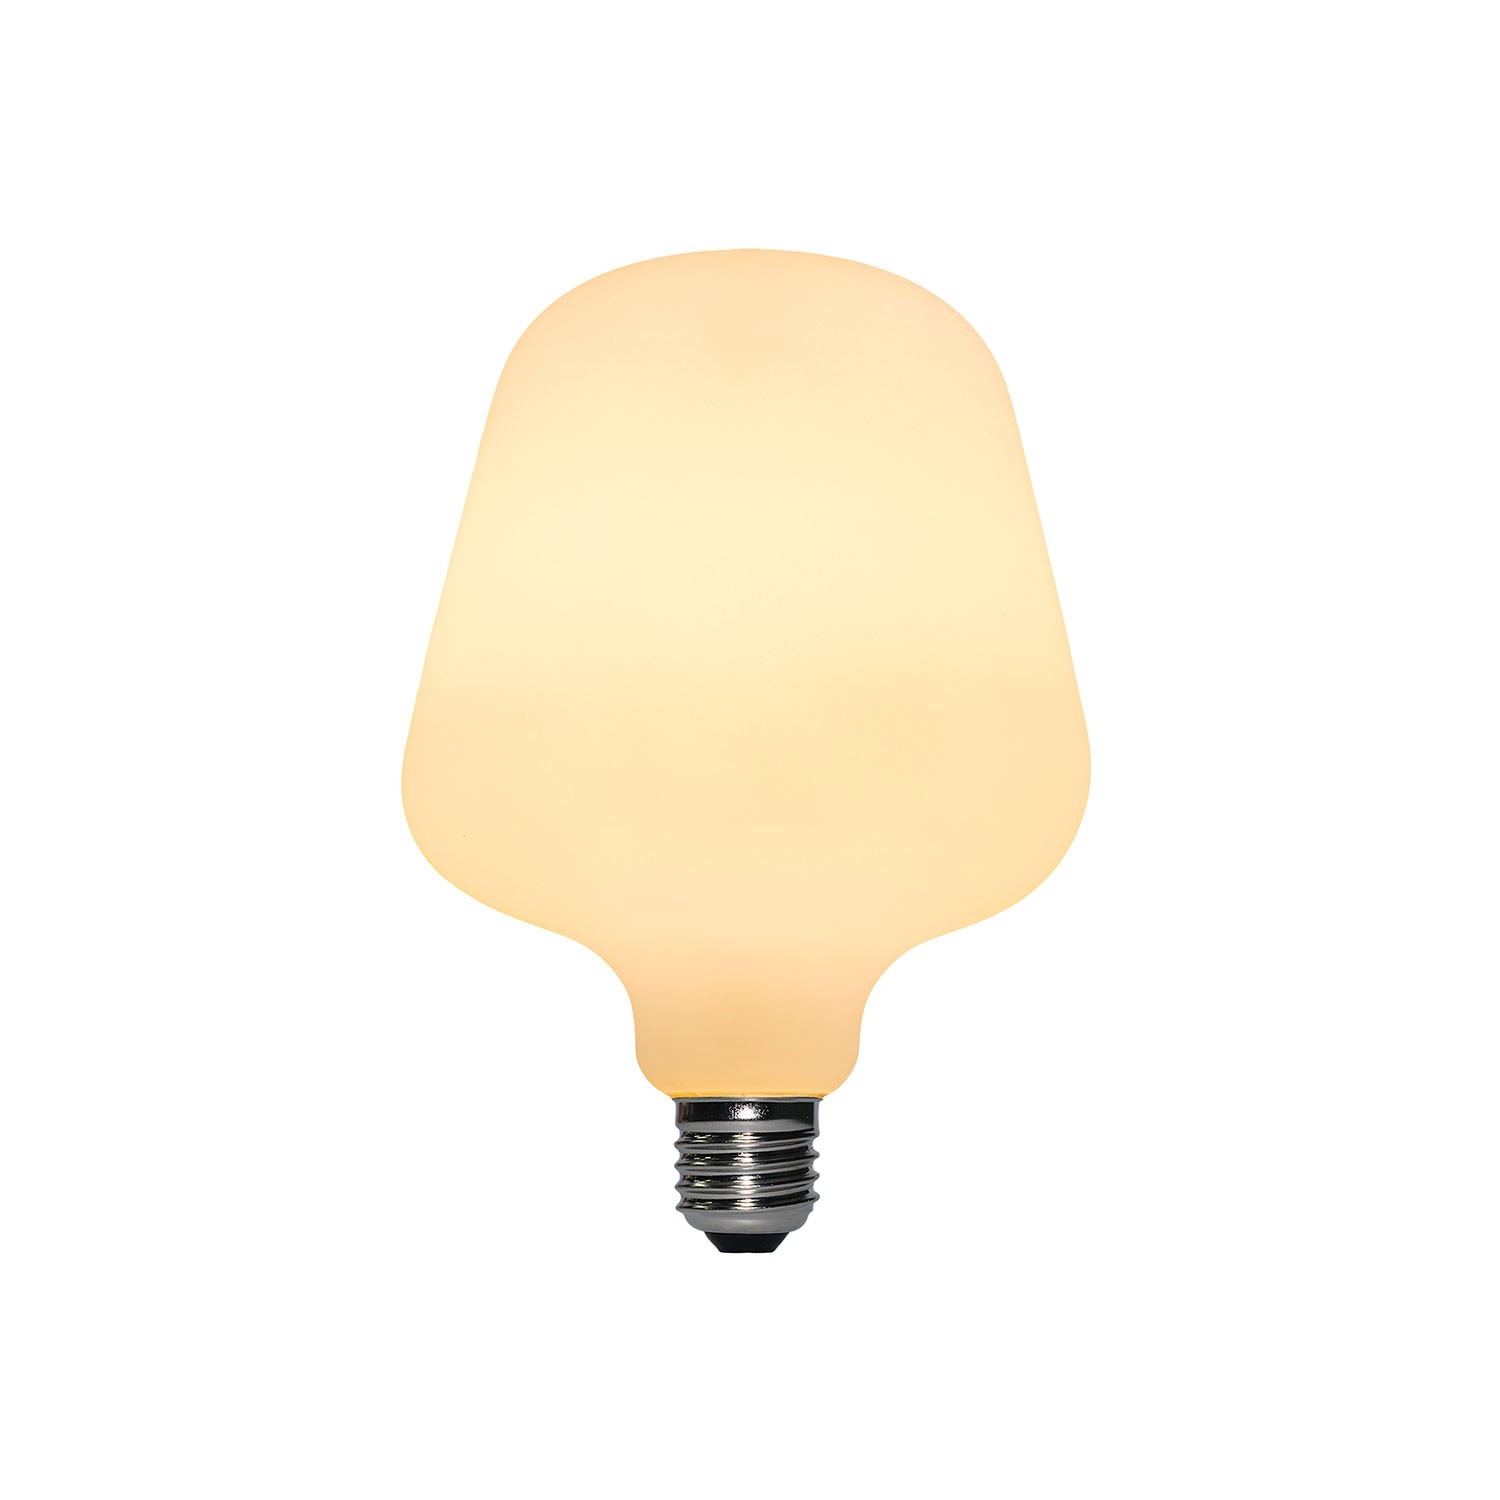 LED Porcelain Light Bulb Zante 6W E27 Dimmable 2700K